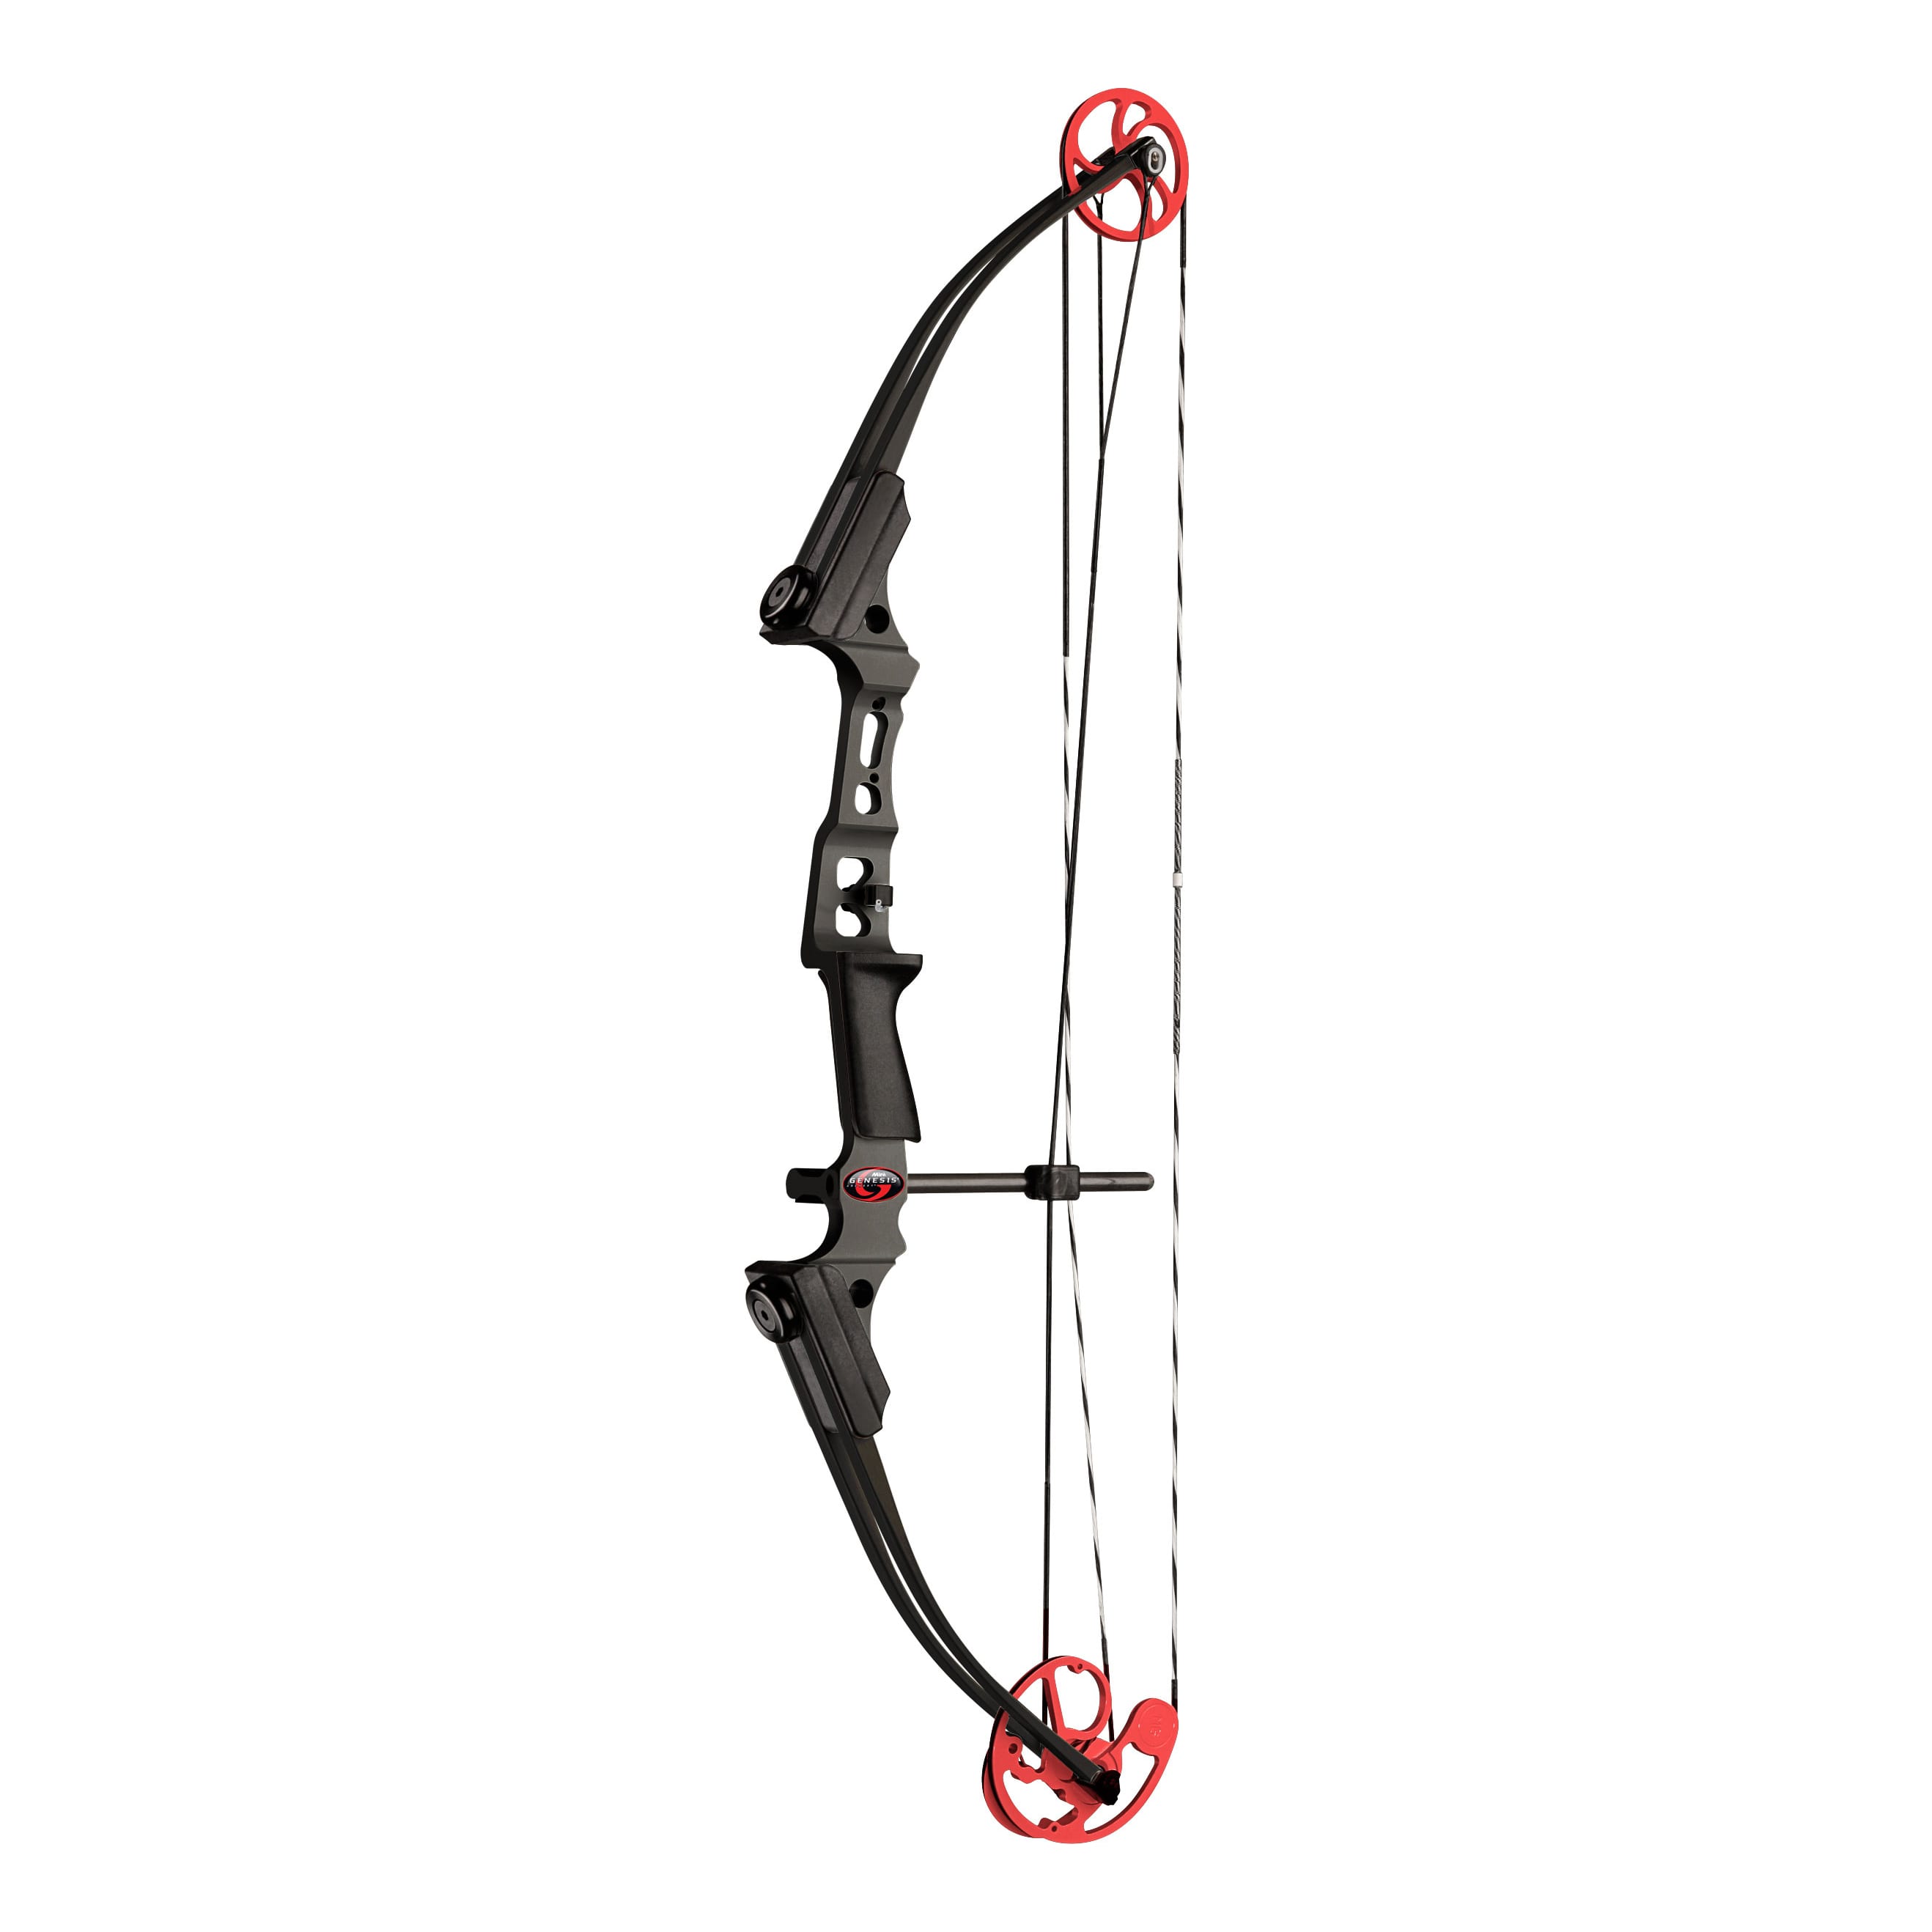 Genesis Archery Original Genesis Bow